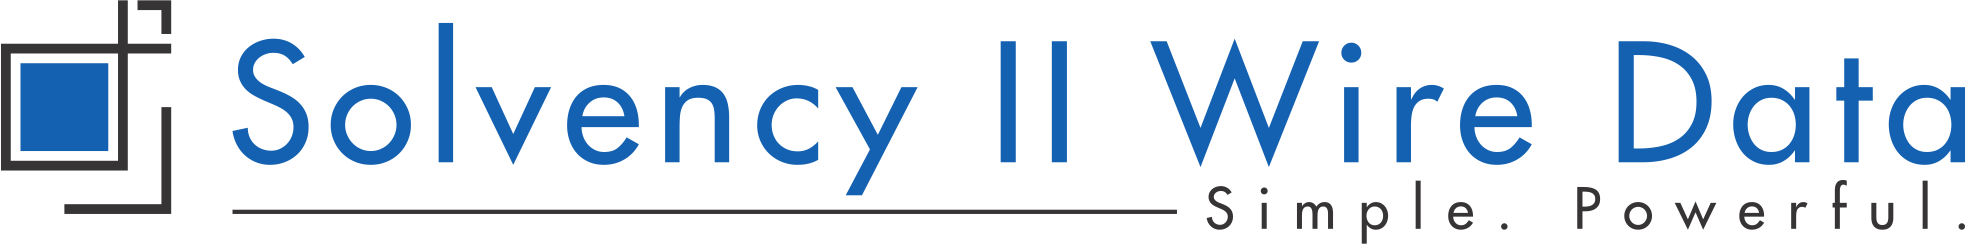 Solvency II Wire Data logo